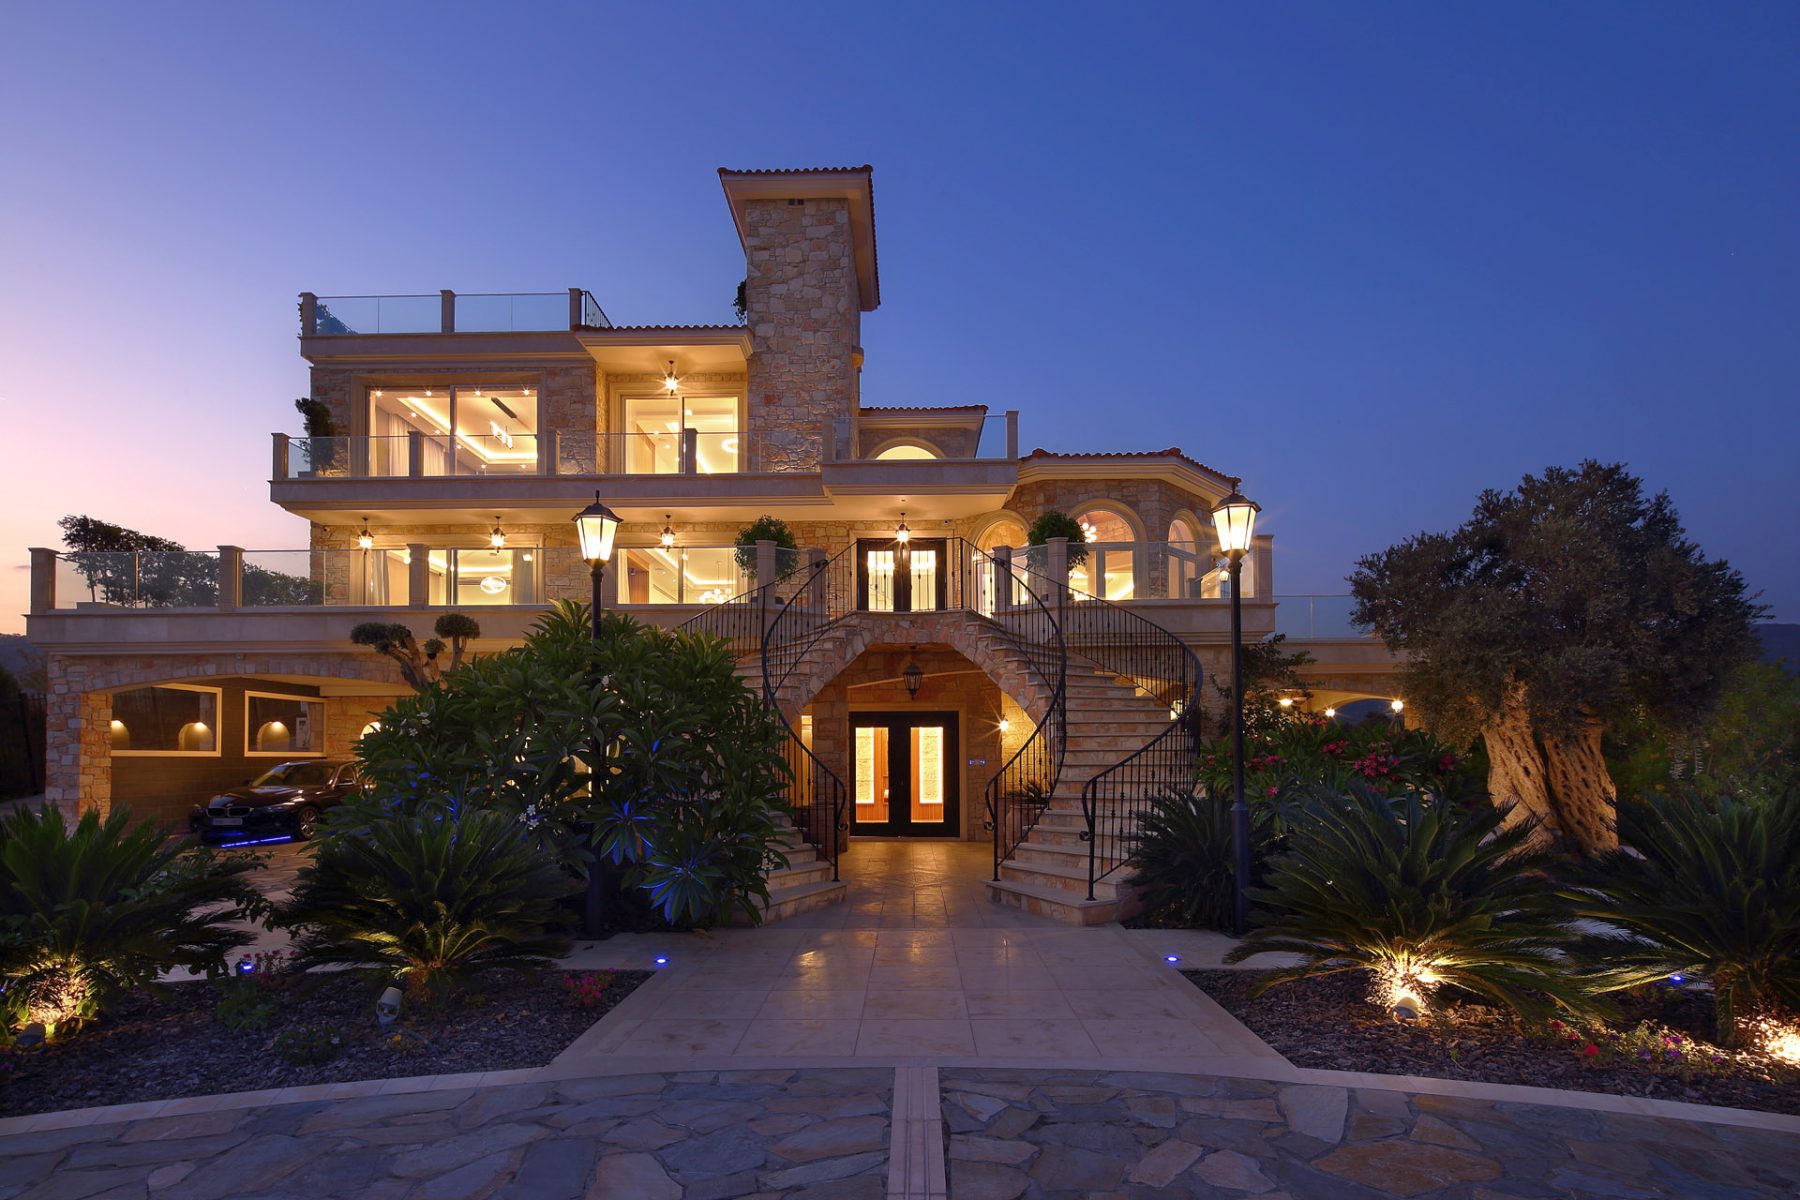 Luxury Organic Estate in Limassol Suburb Spanning 10 000 sq.m.